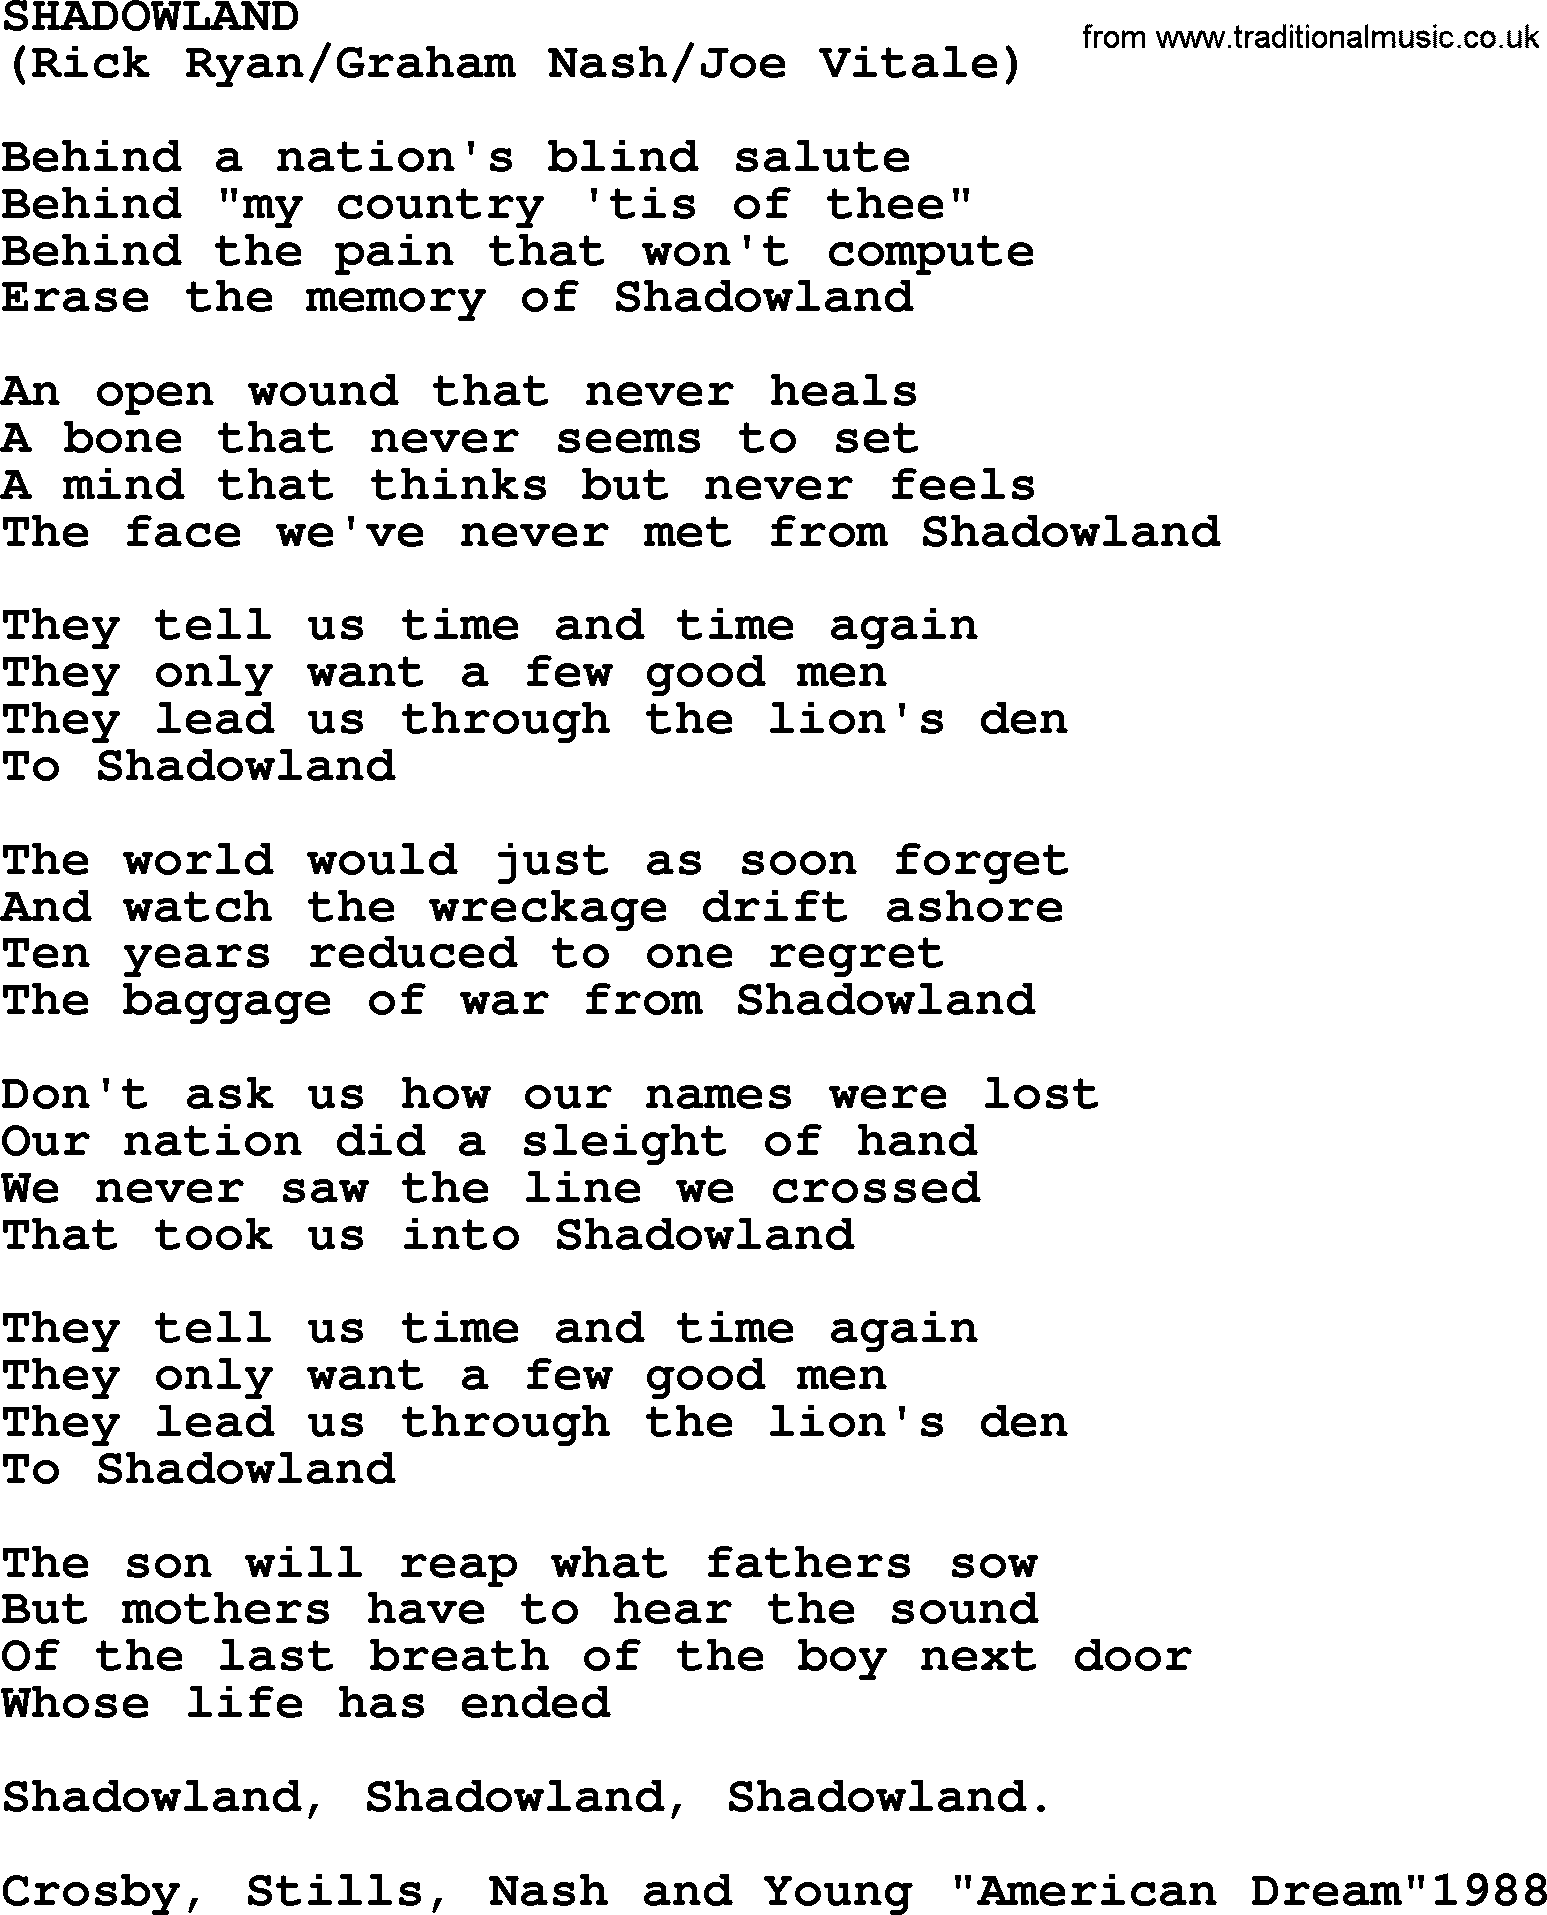 The Byrds song Shadowland, lyrics